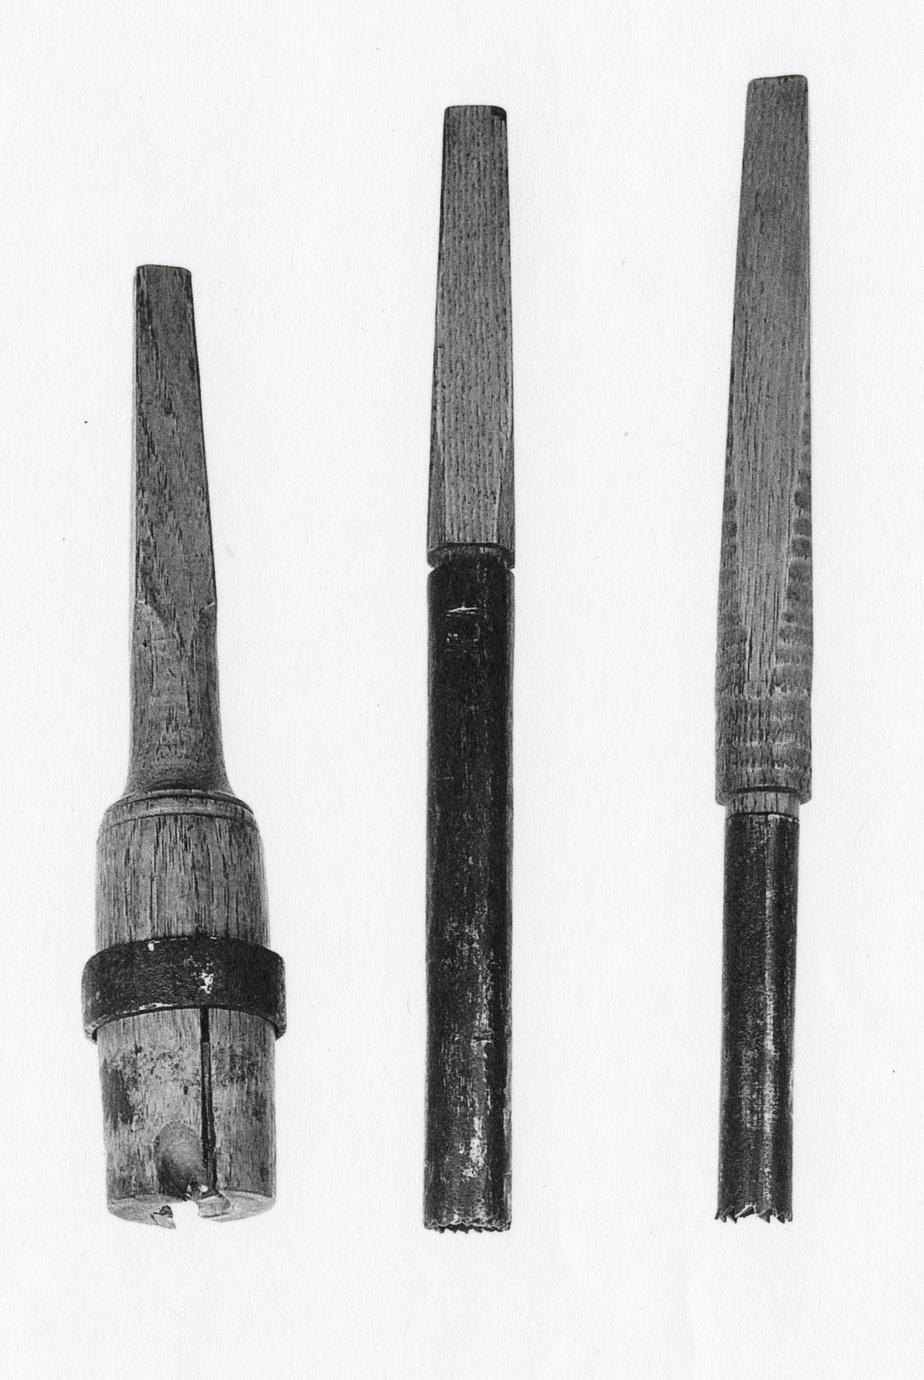 Three examples of tenon-cutting or plug bits.